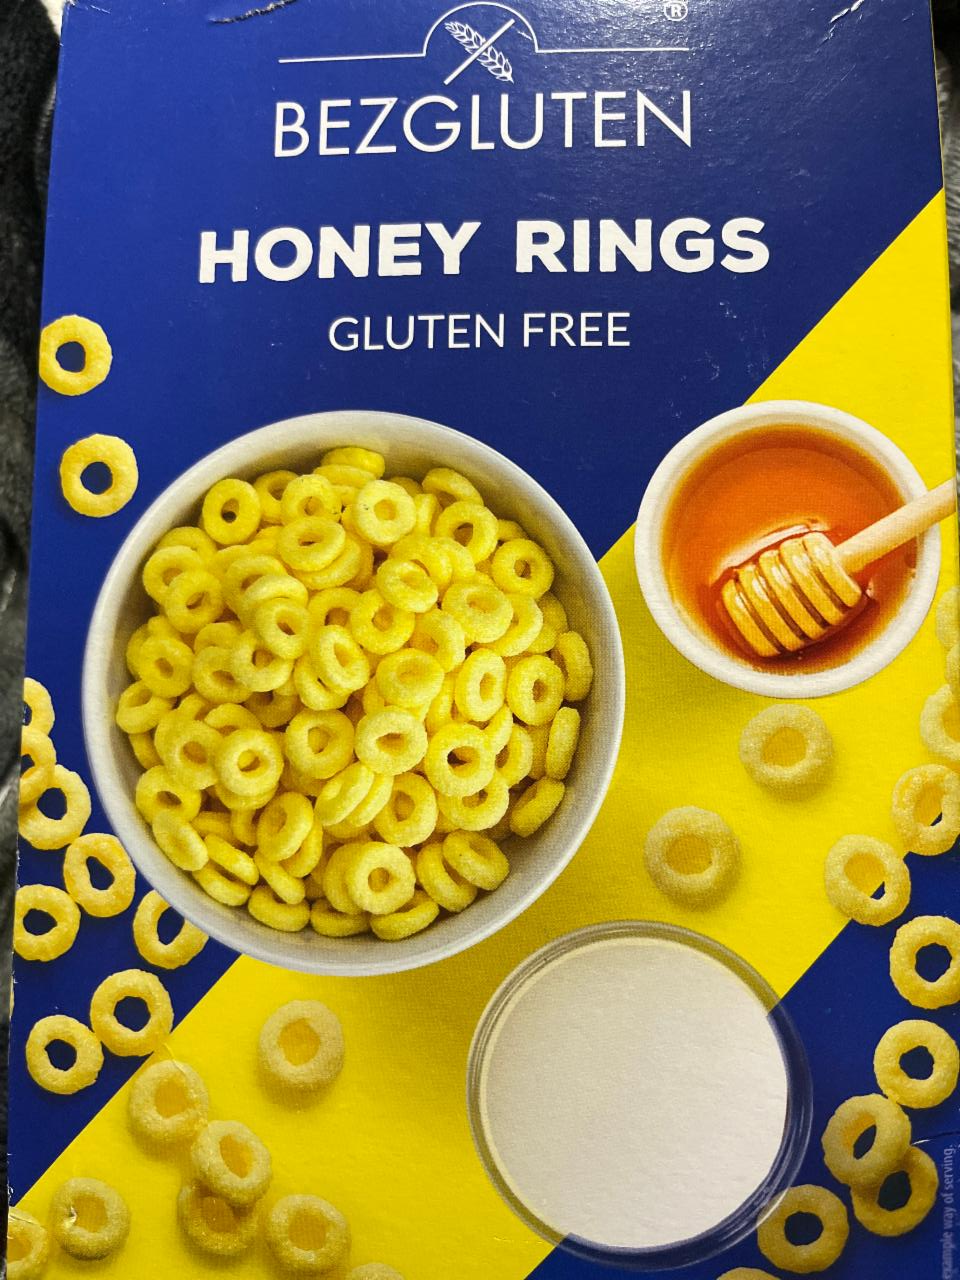 Фото - Кільця медові Honey Rings Gluten Free Bezgluten